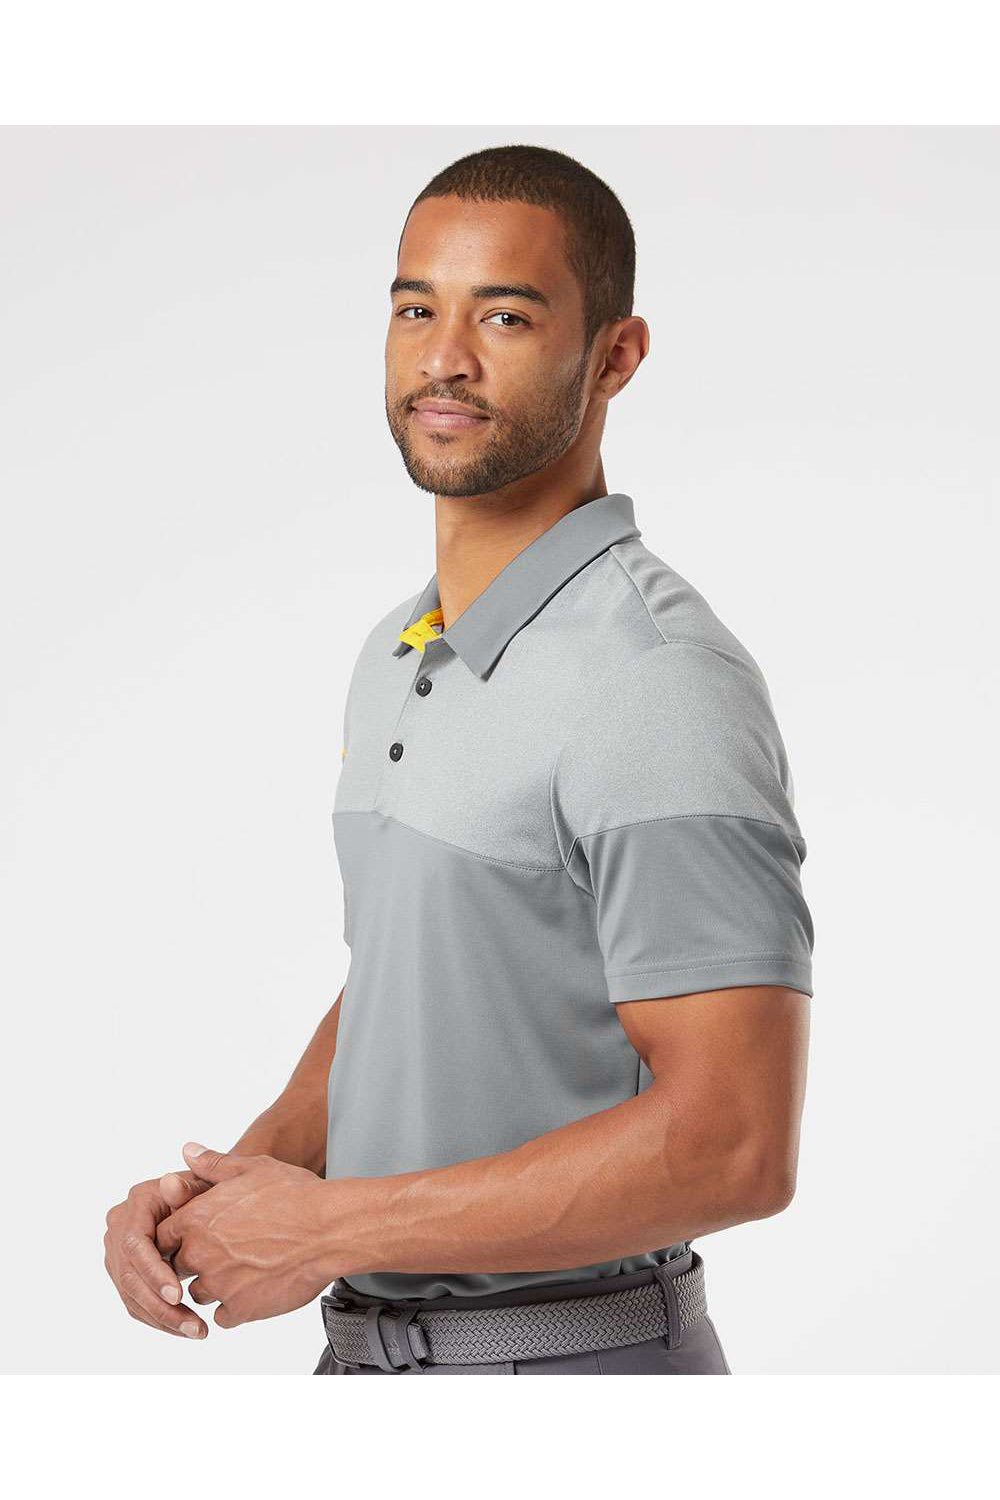 Adidas A213 Mens 3 Stripes Heathered Colorblock Short Sleeve Polo Shirt Vista Grey/Yellow Model Side